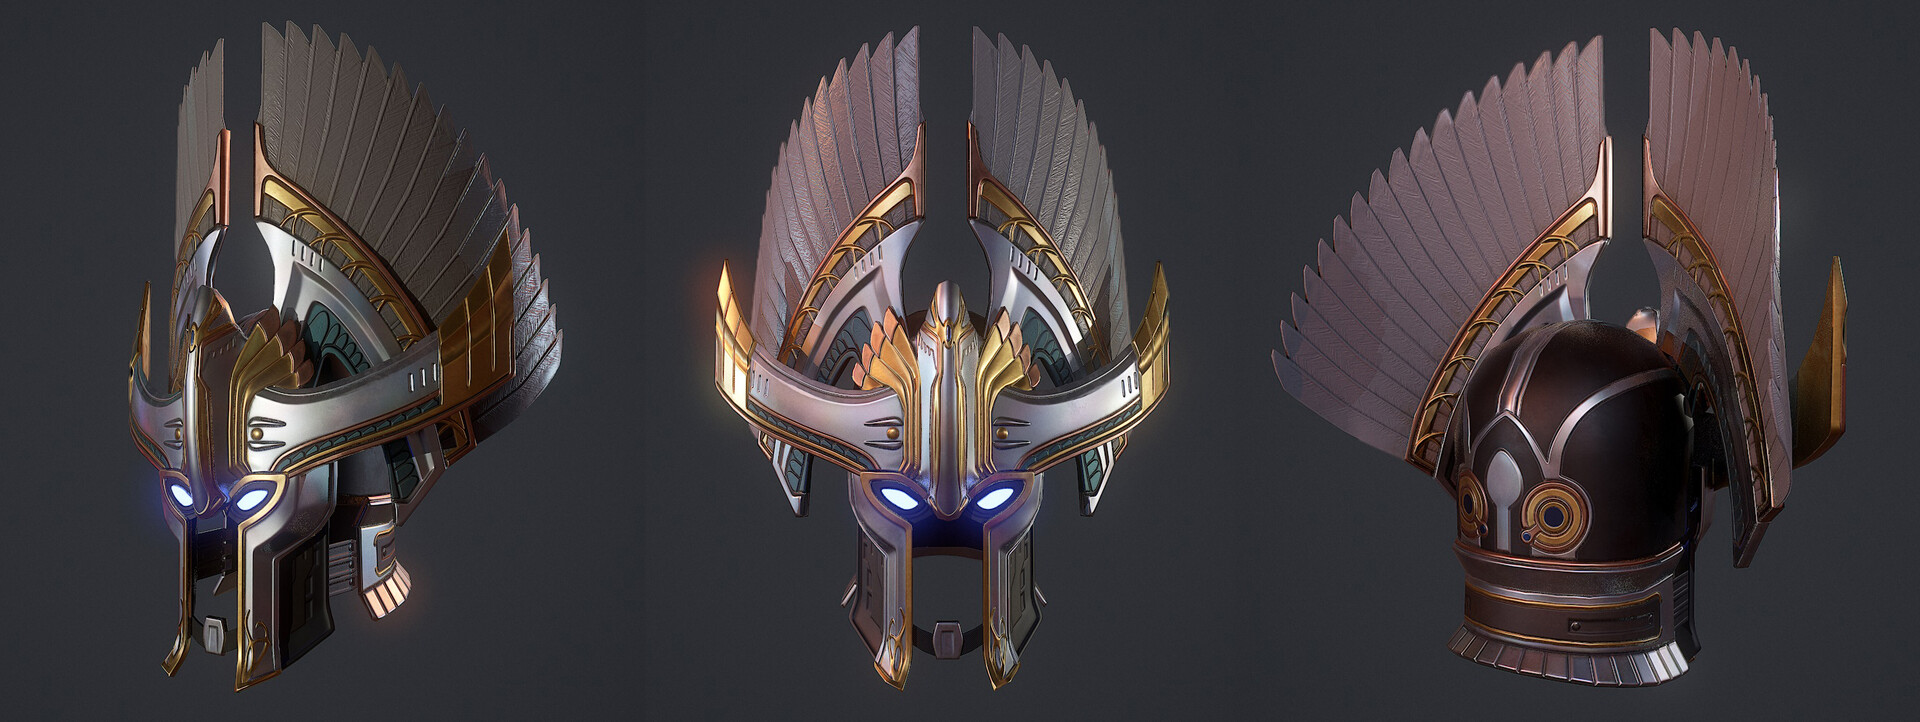 Hi guys i have create this "Fantasy Helmet" so hope you guys like...